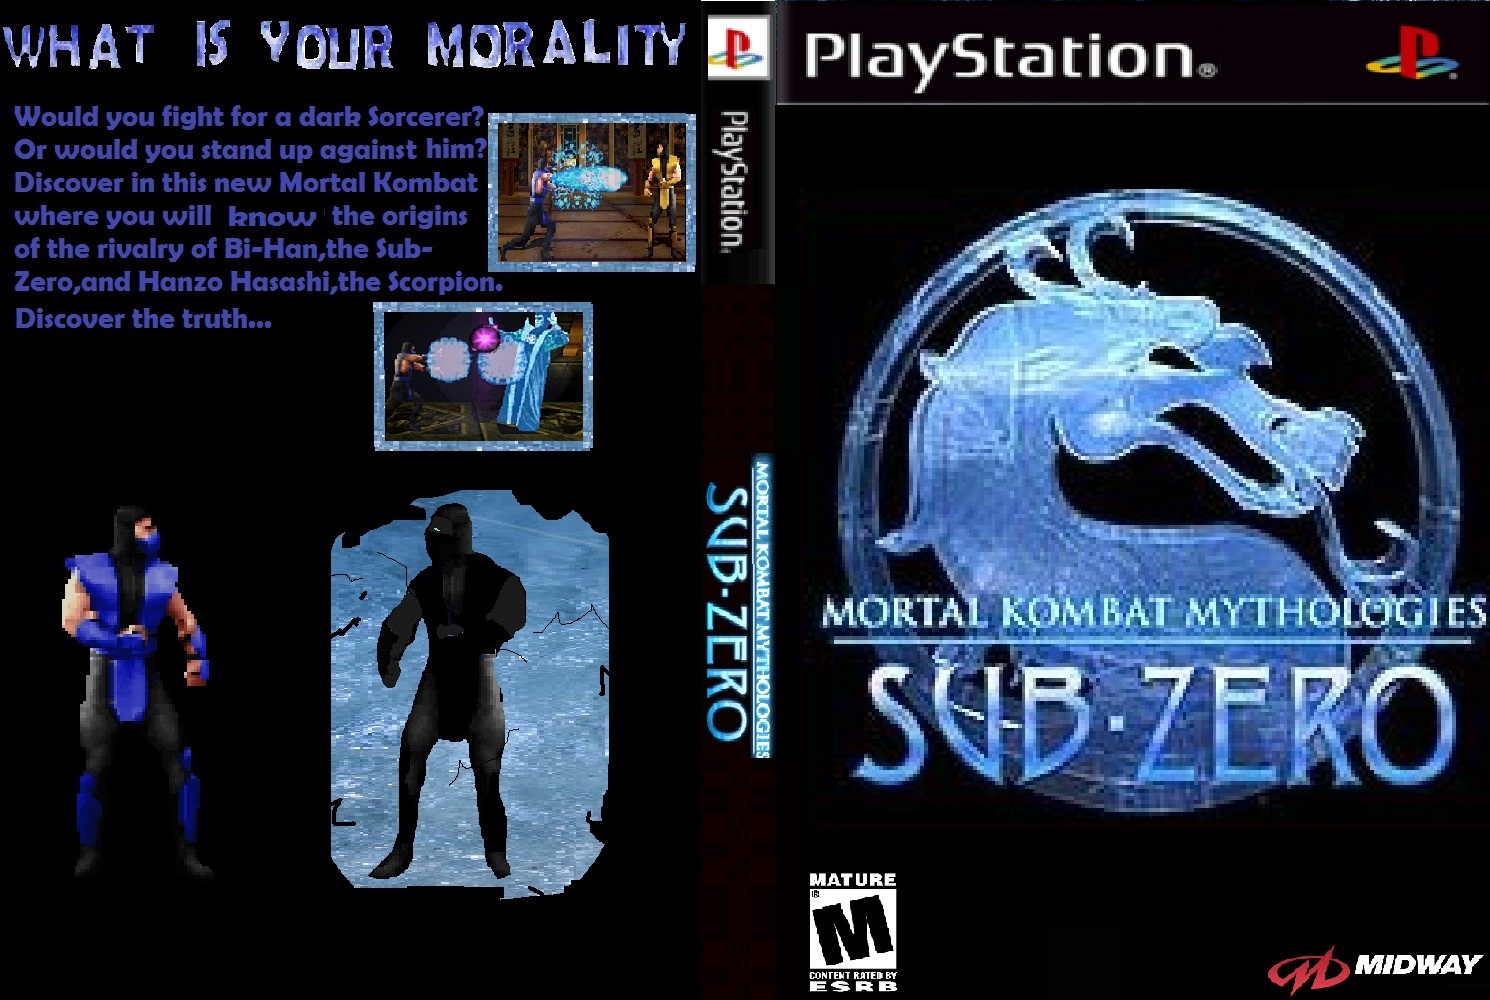 Mortal Kombat Mythologies : Sub-Zero box cover